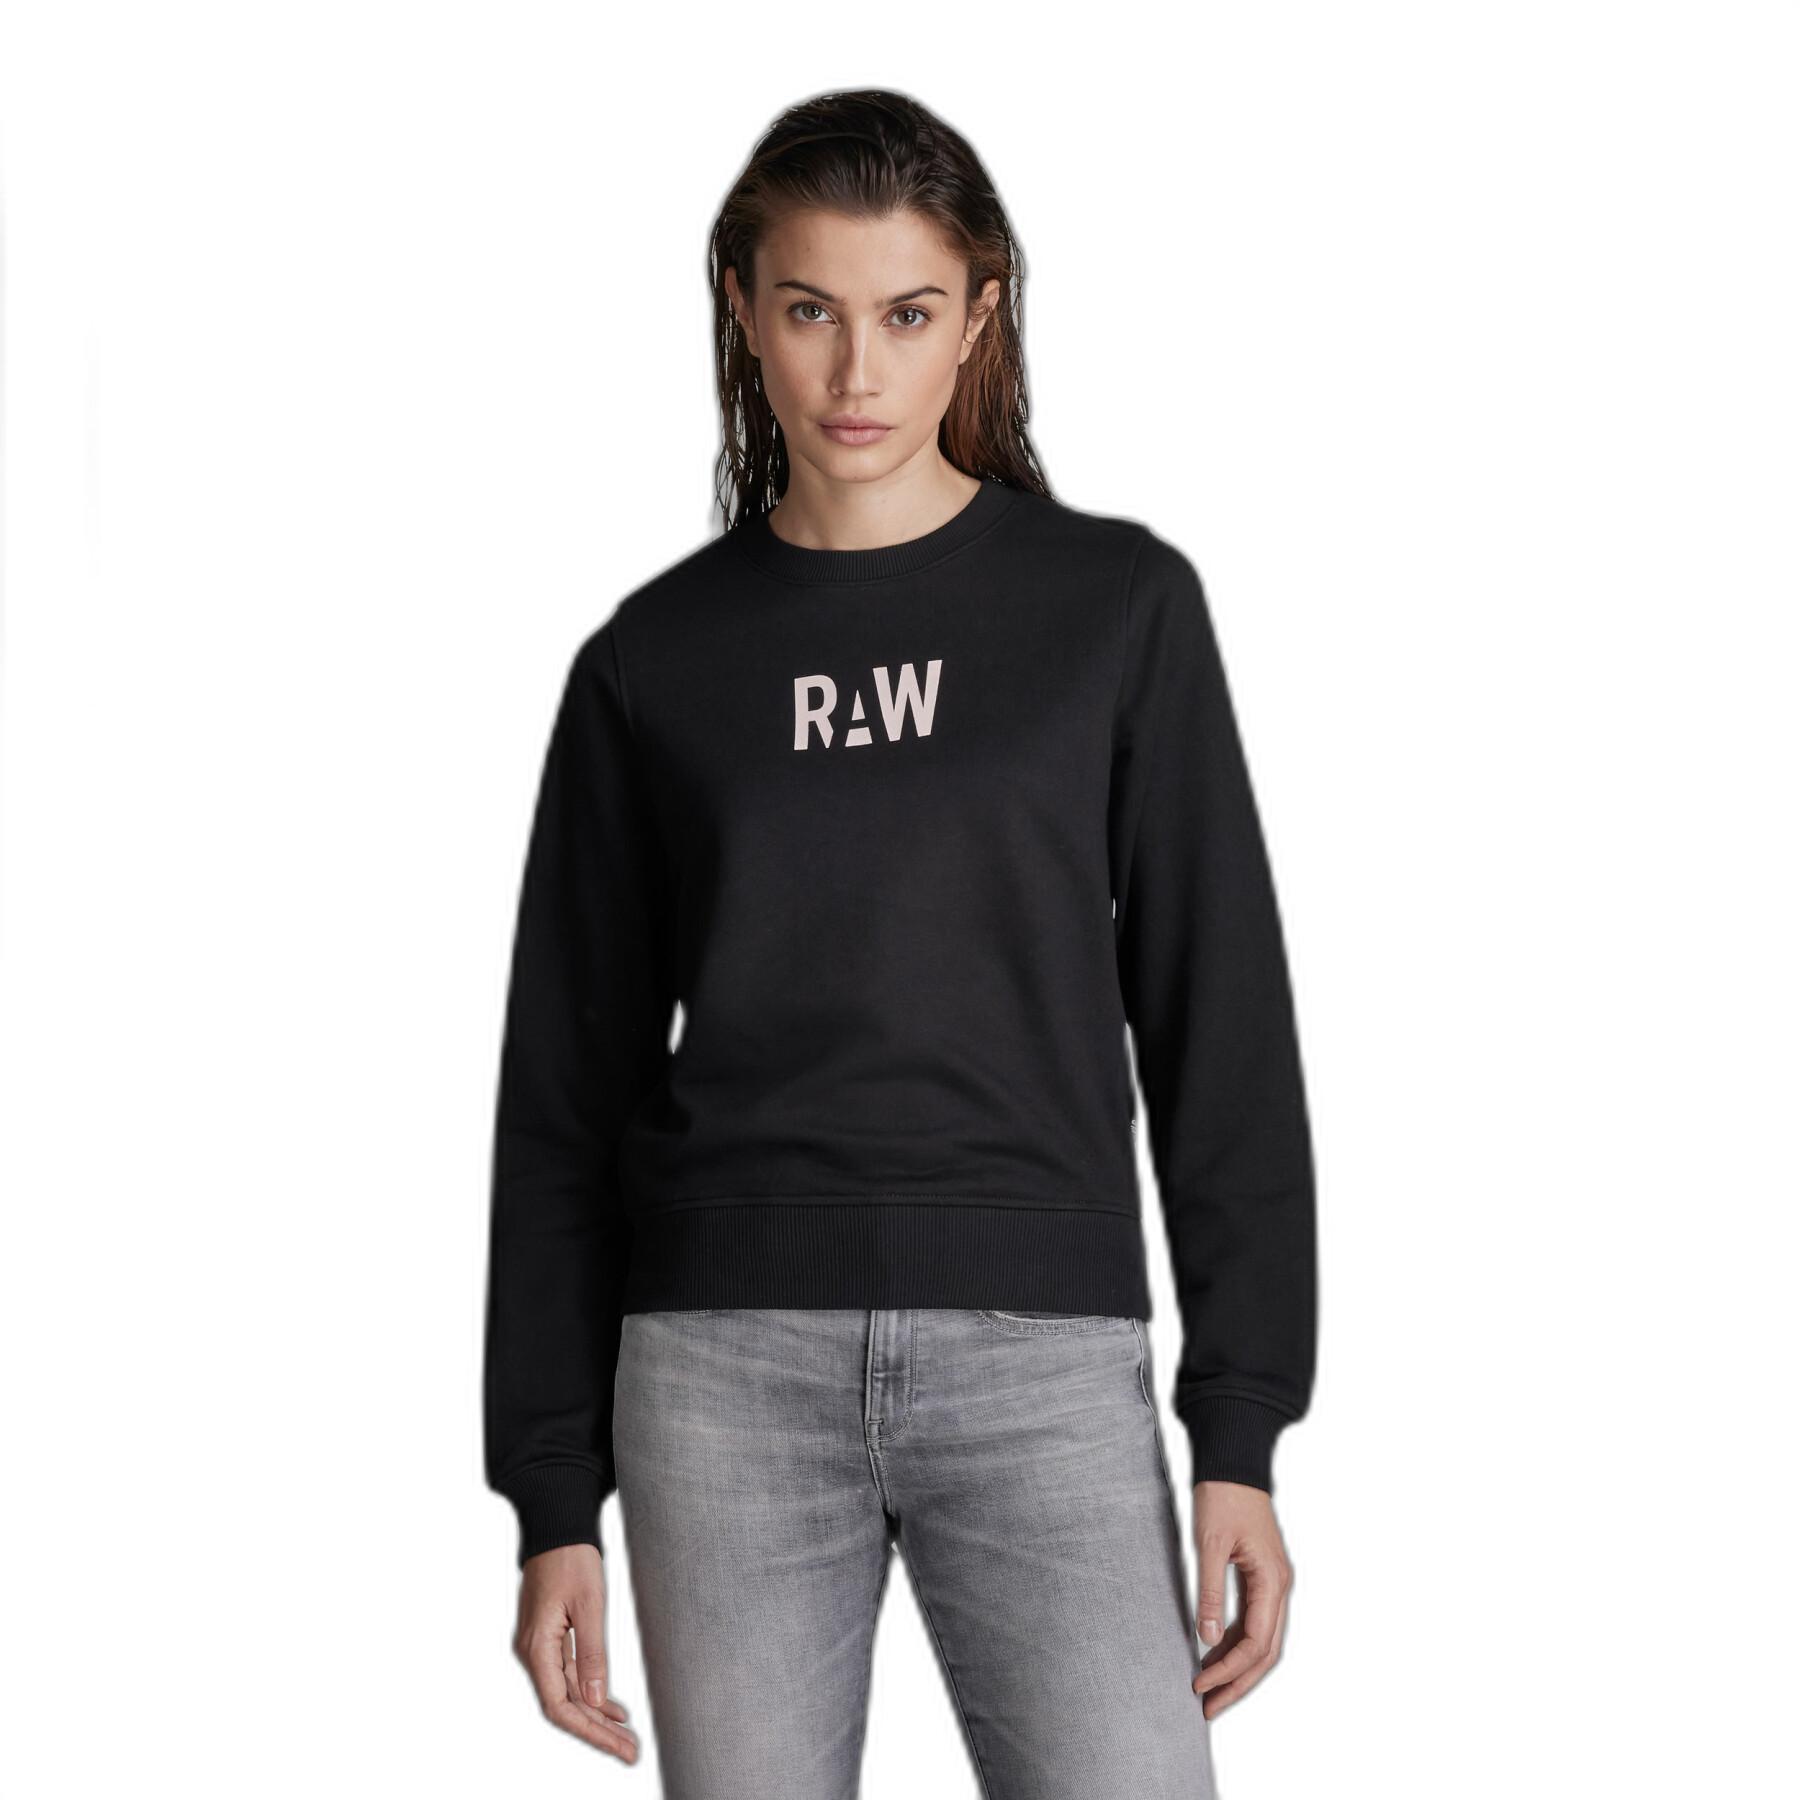 Langarm-Sweatshirt, Damen G-Star Graphic 2 R